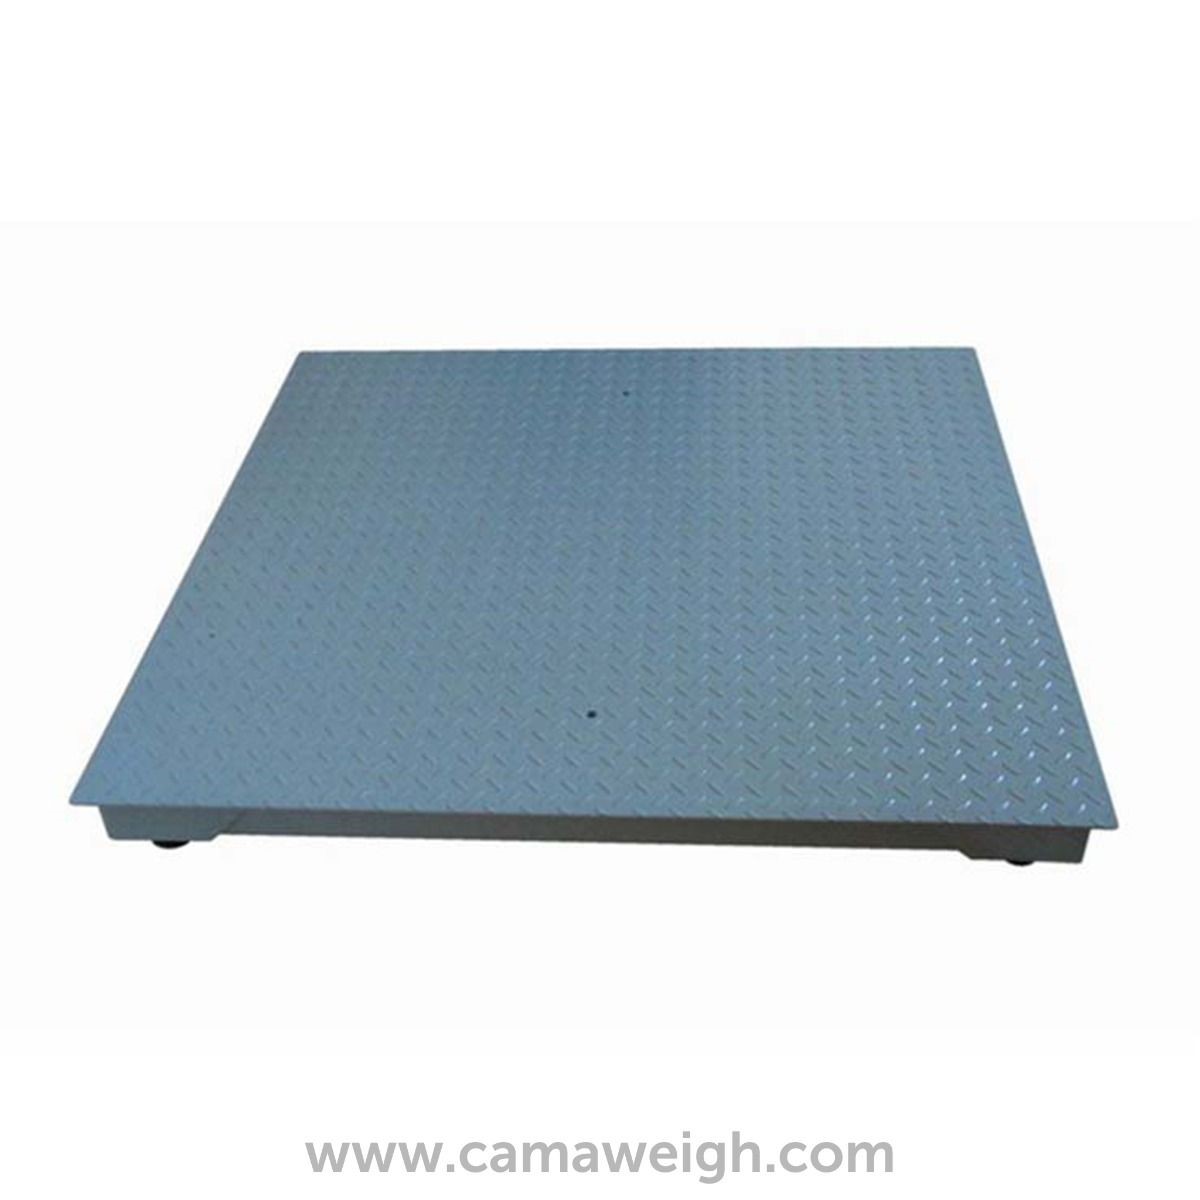 Platform of Standard Mild Steel Floor Scale For Sale by Camaweigh